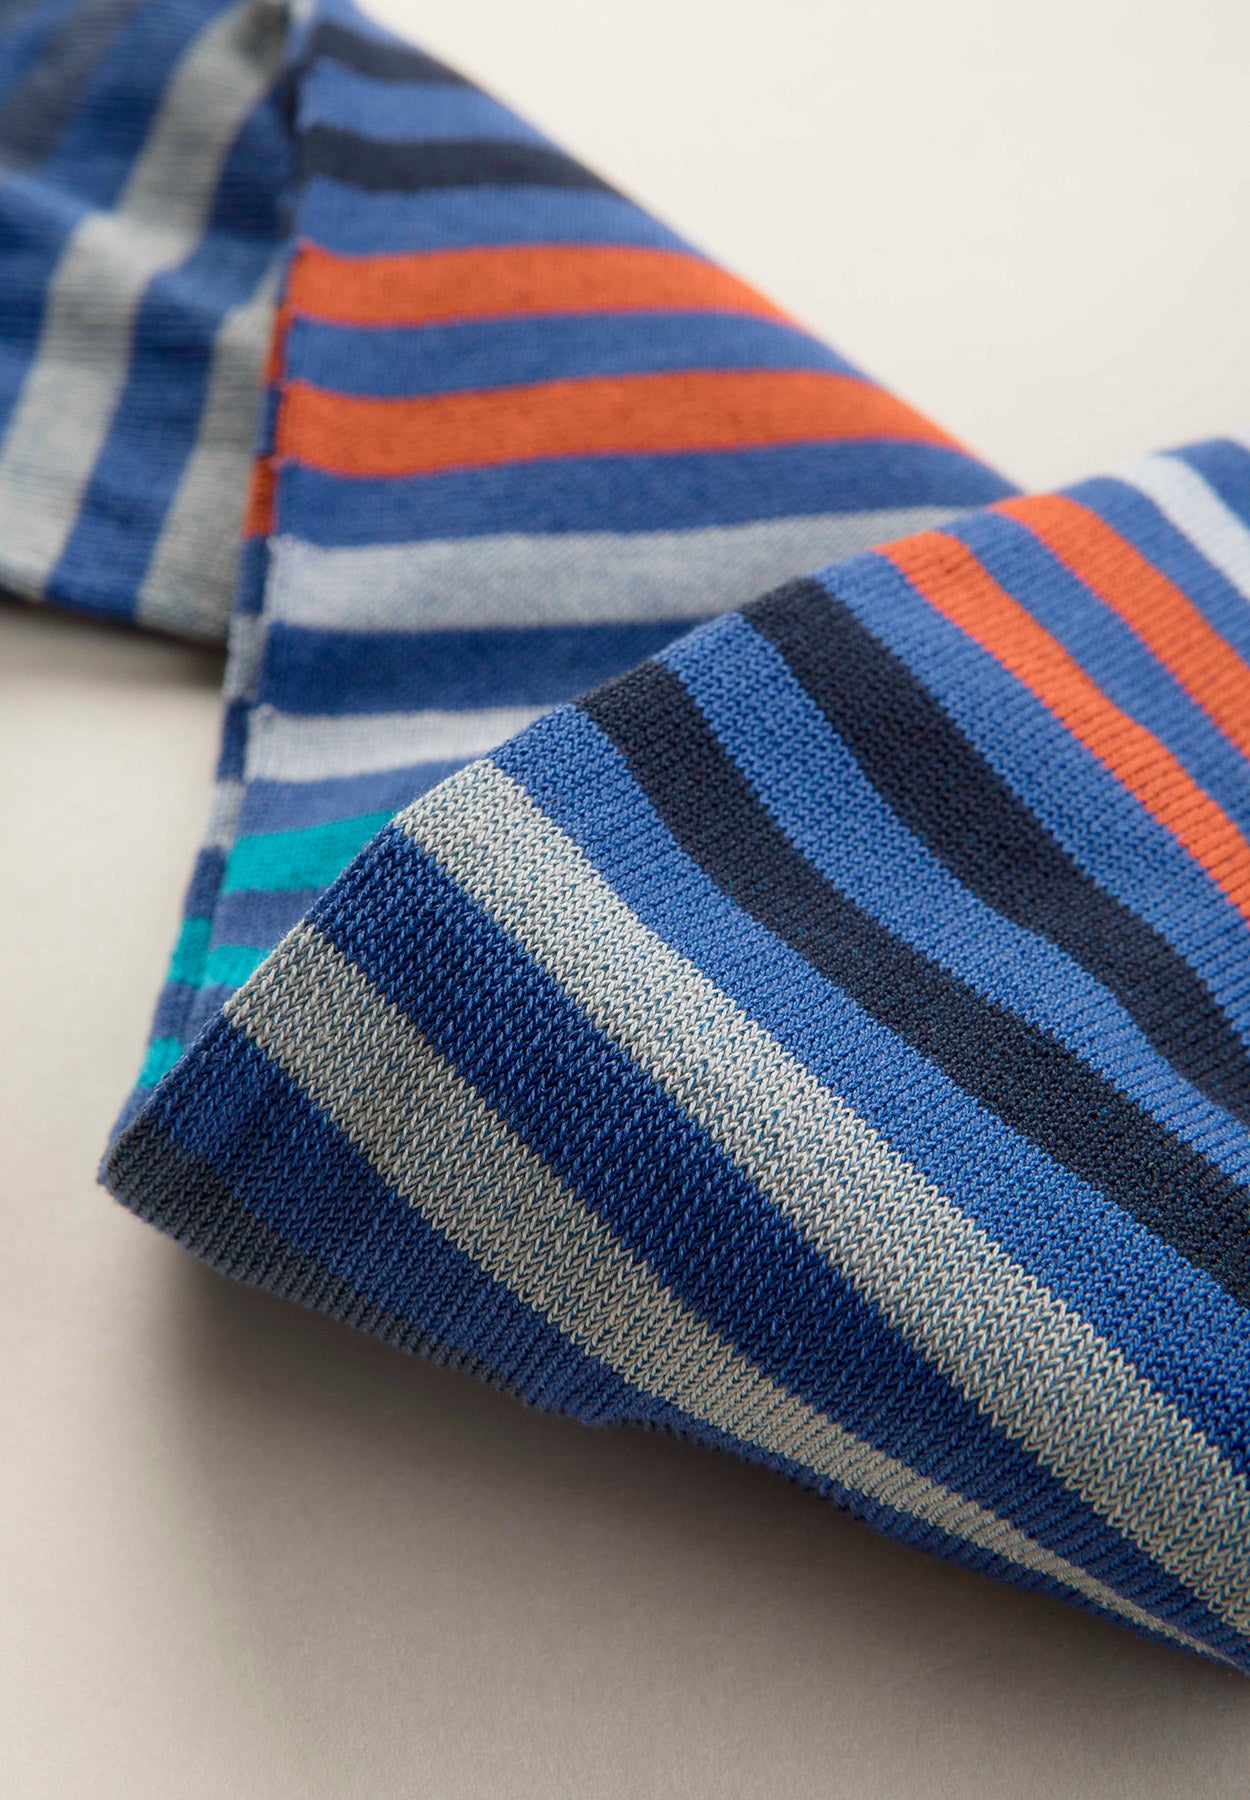 Multicoloured striped stretch cotton royal socks